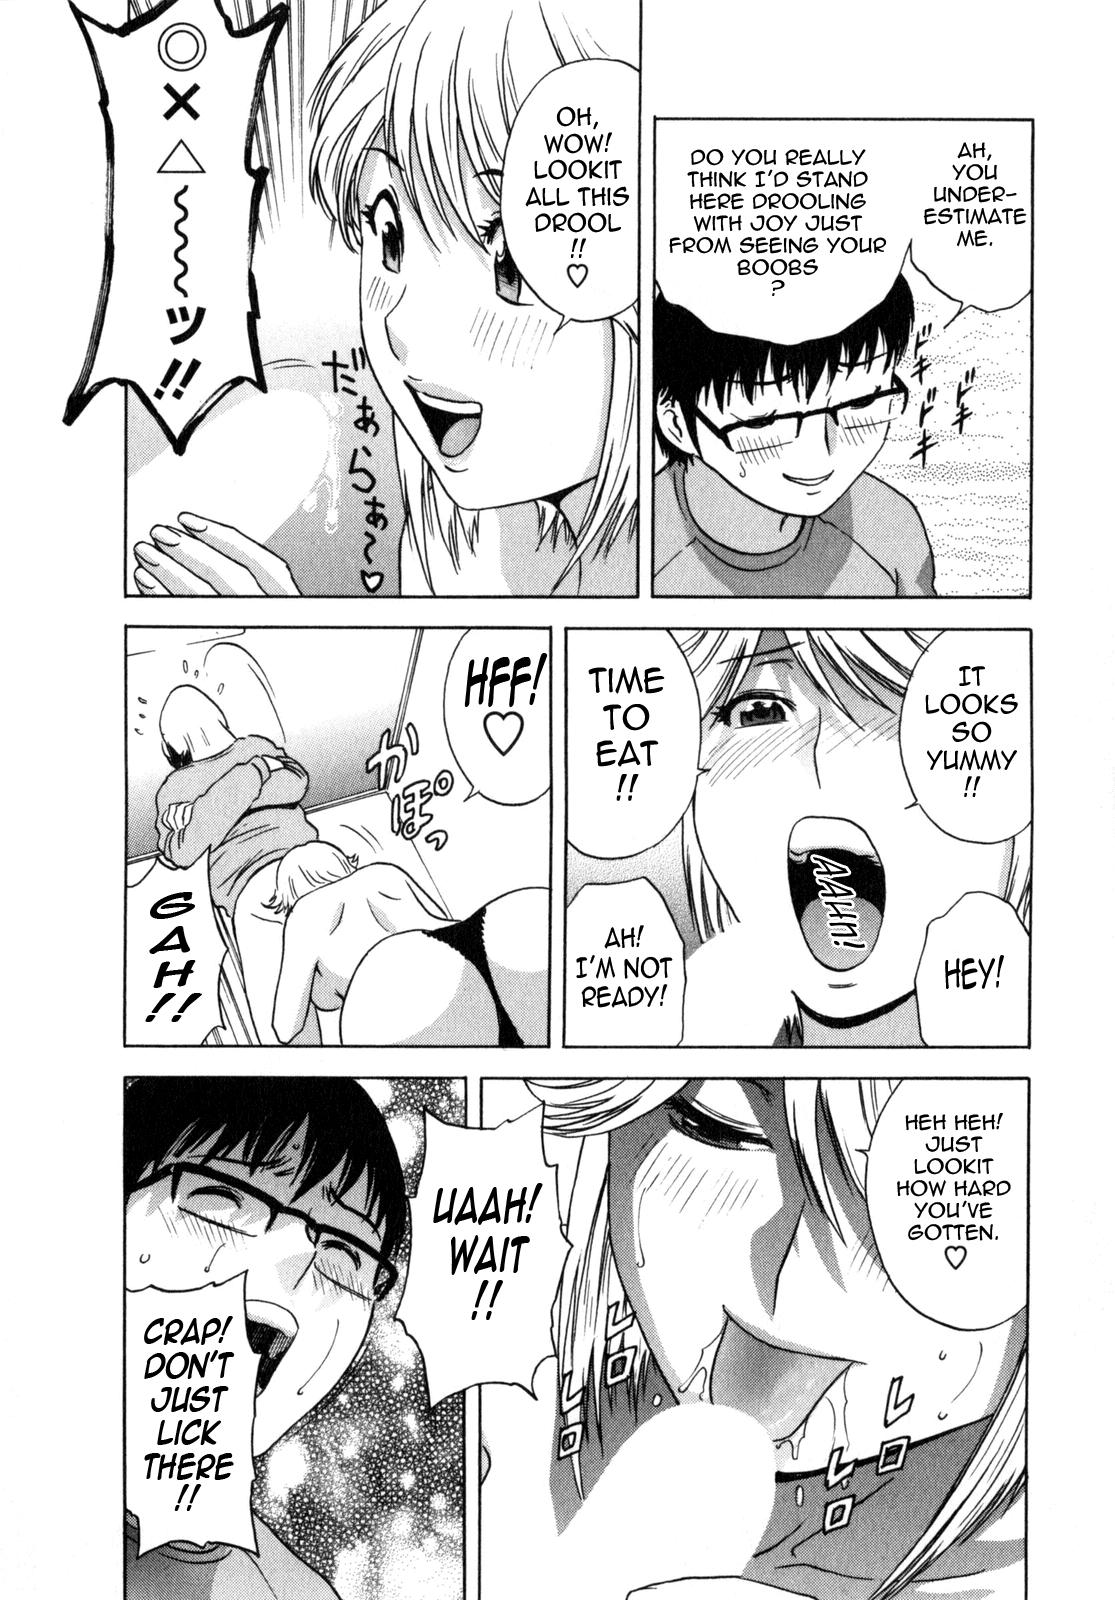 [Hidemaru] Life with Married Women Just Like a Manga 1 - Ch. 1-5 [English] {Tadanohito} 33